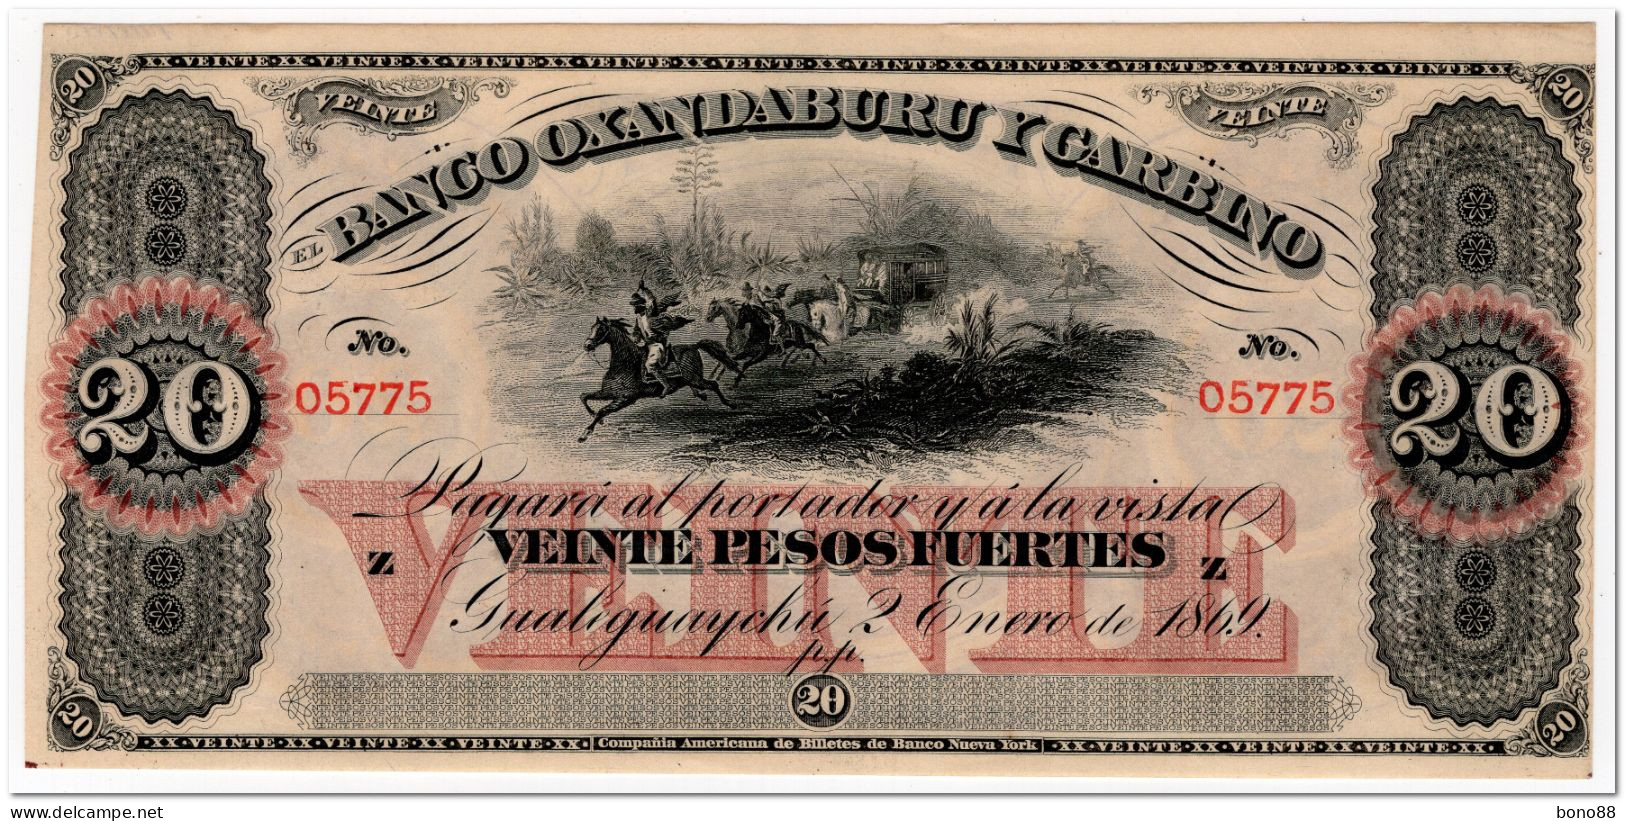 ARGENTINA,BANCO OXANDABURU Y GARBINO,20 PESOS FUERTES,1869,P.S1794,AU-UNC - Argentinien